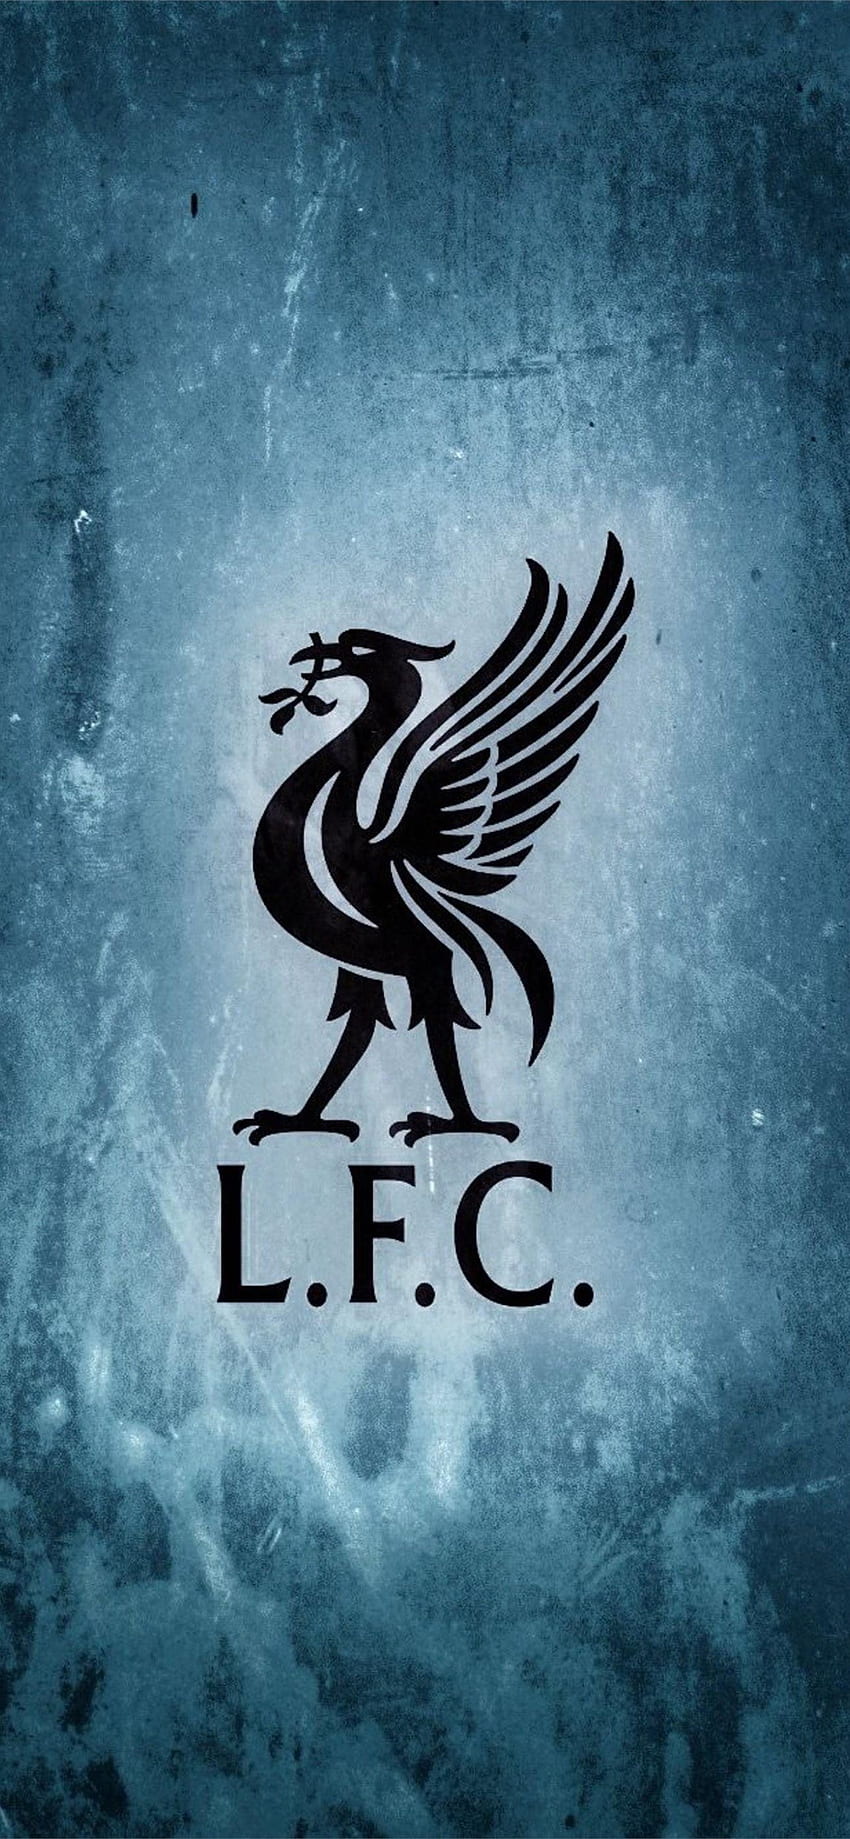 Liverpool FC Desktop Wallpaper - Anfield Online